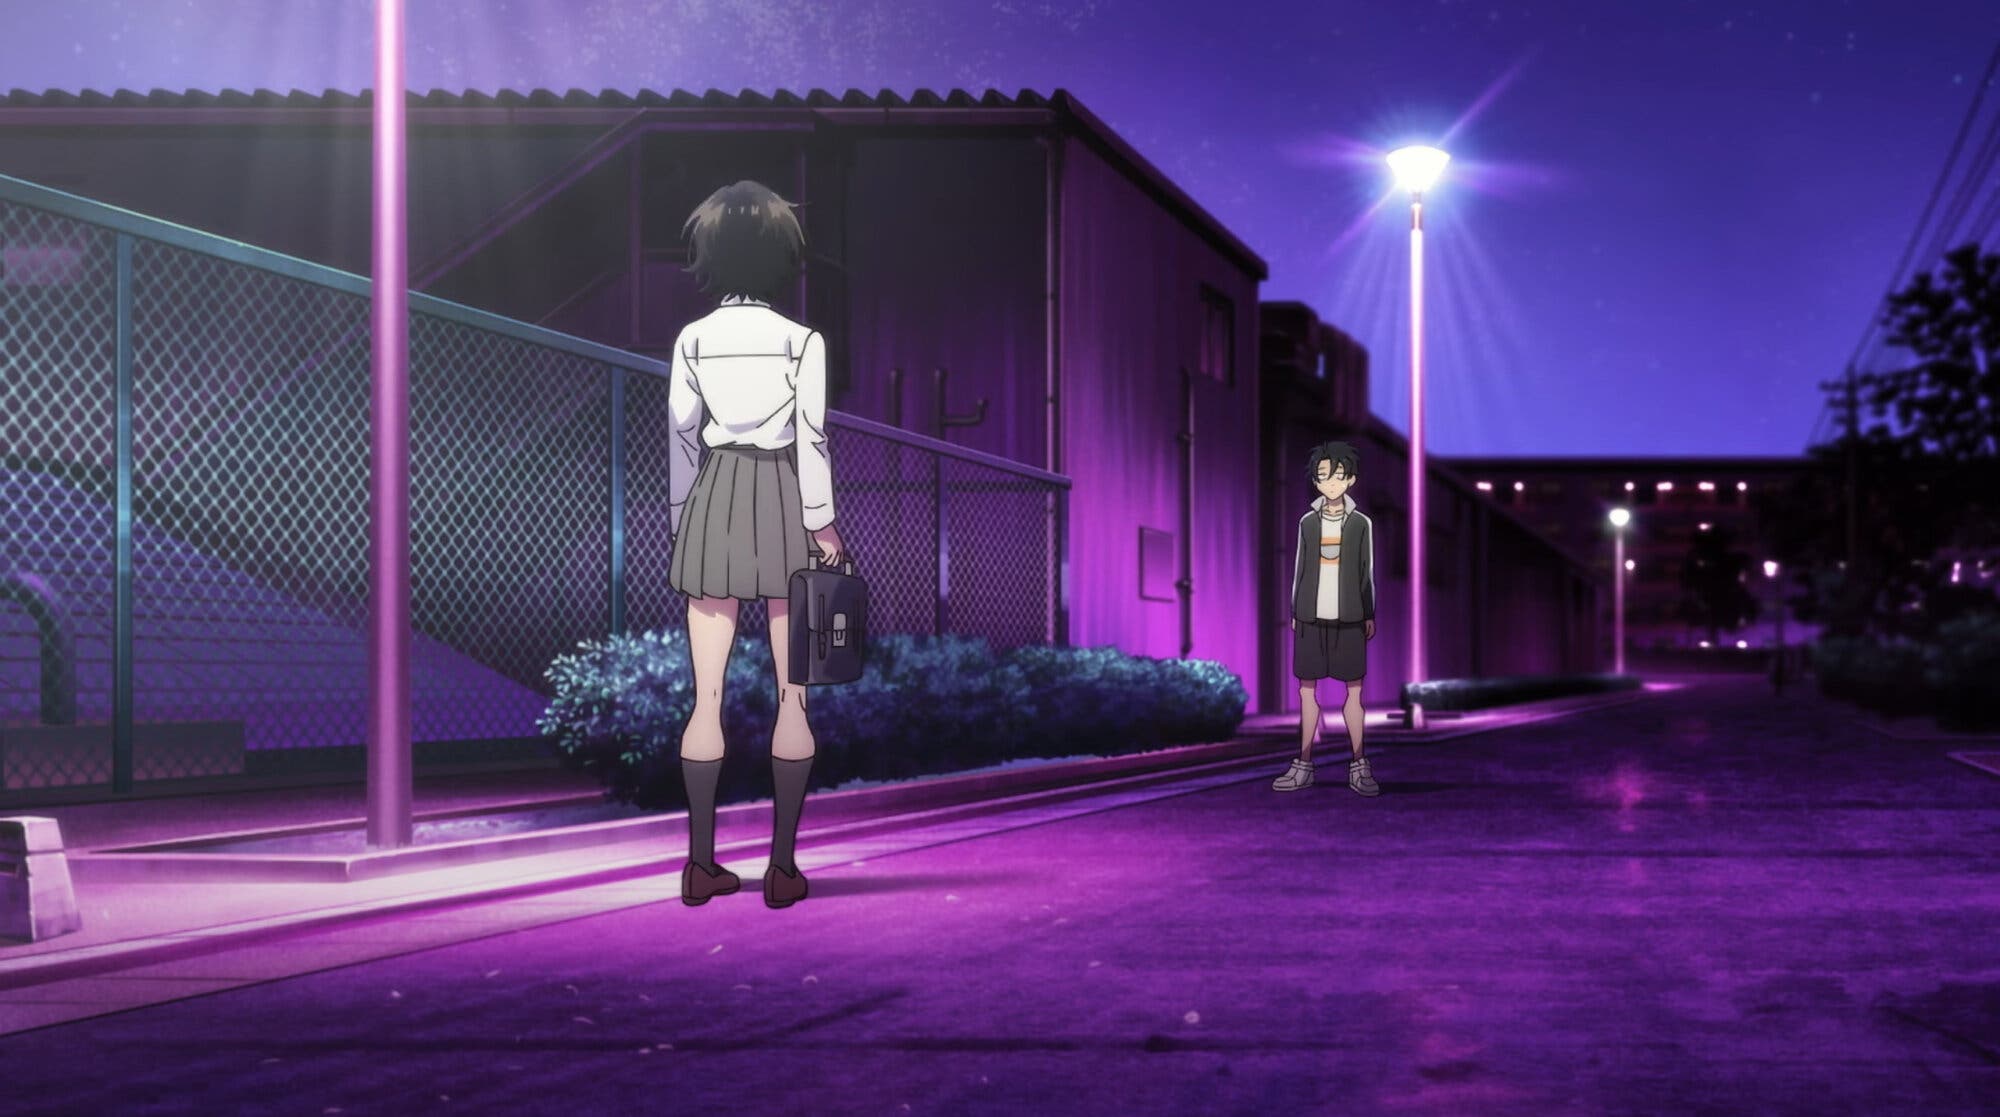 Vídeo promocional da série anime Call of the Night destaca Akira Asai